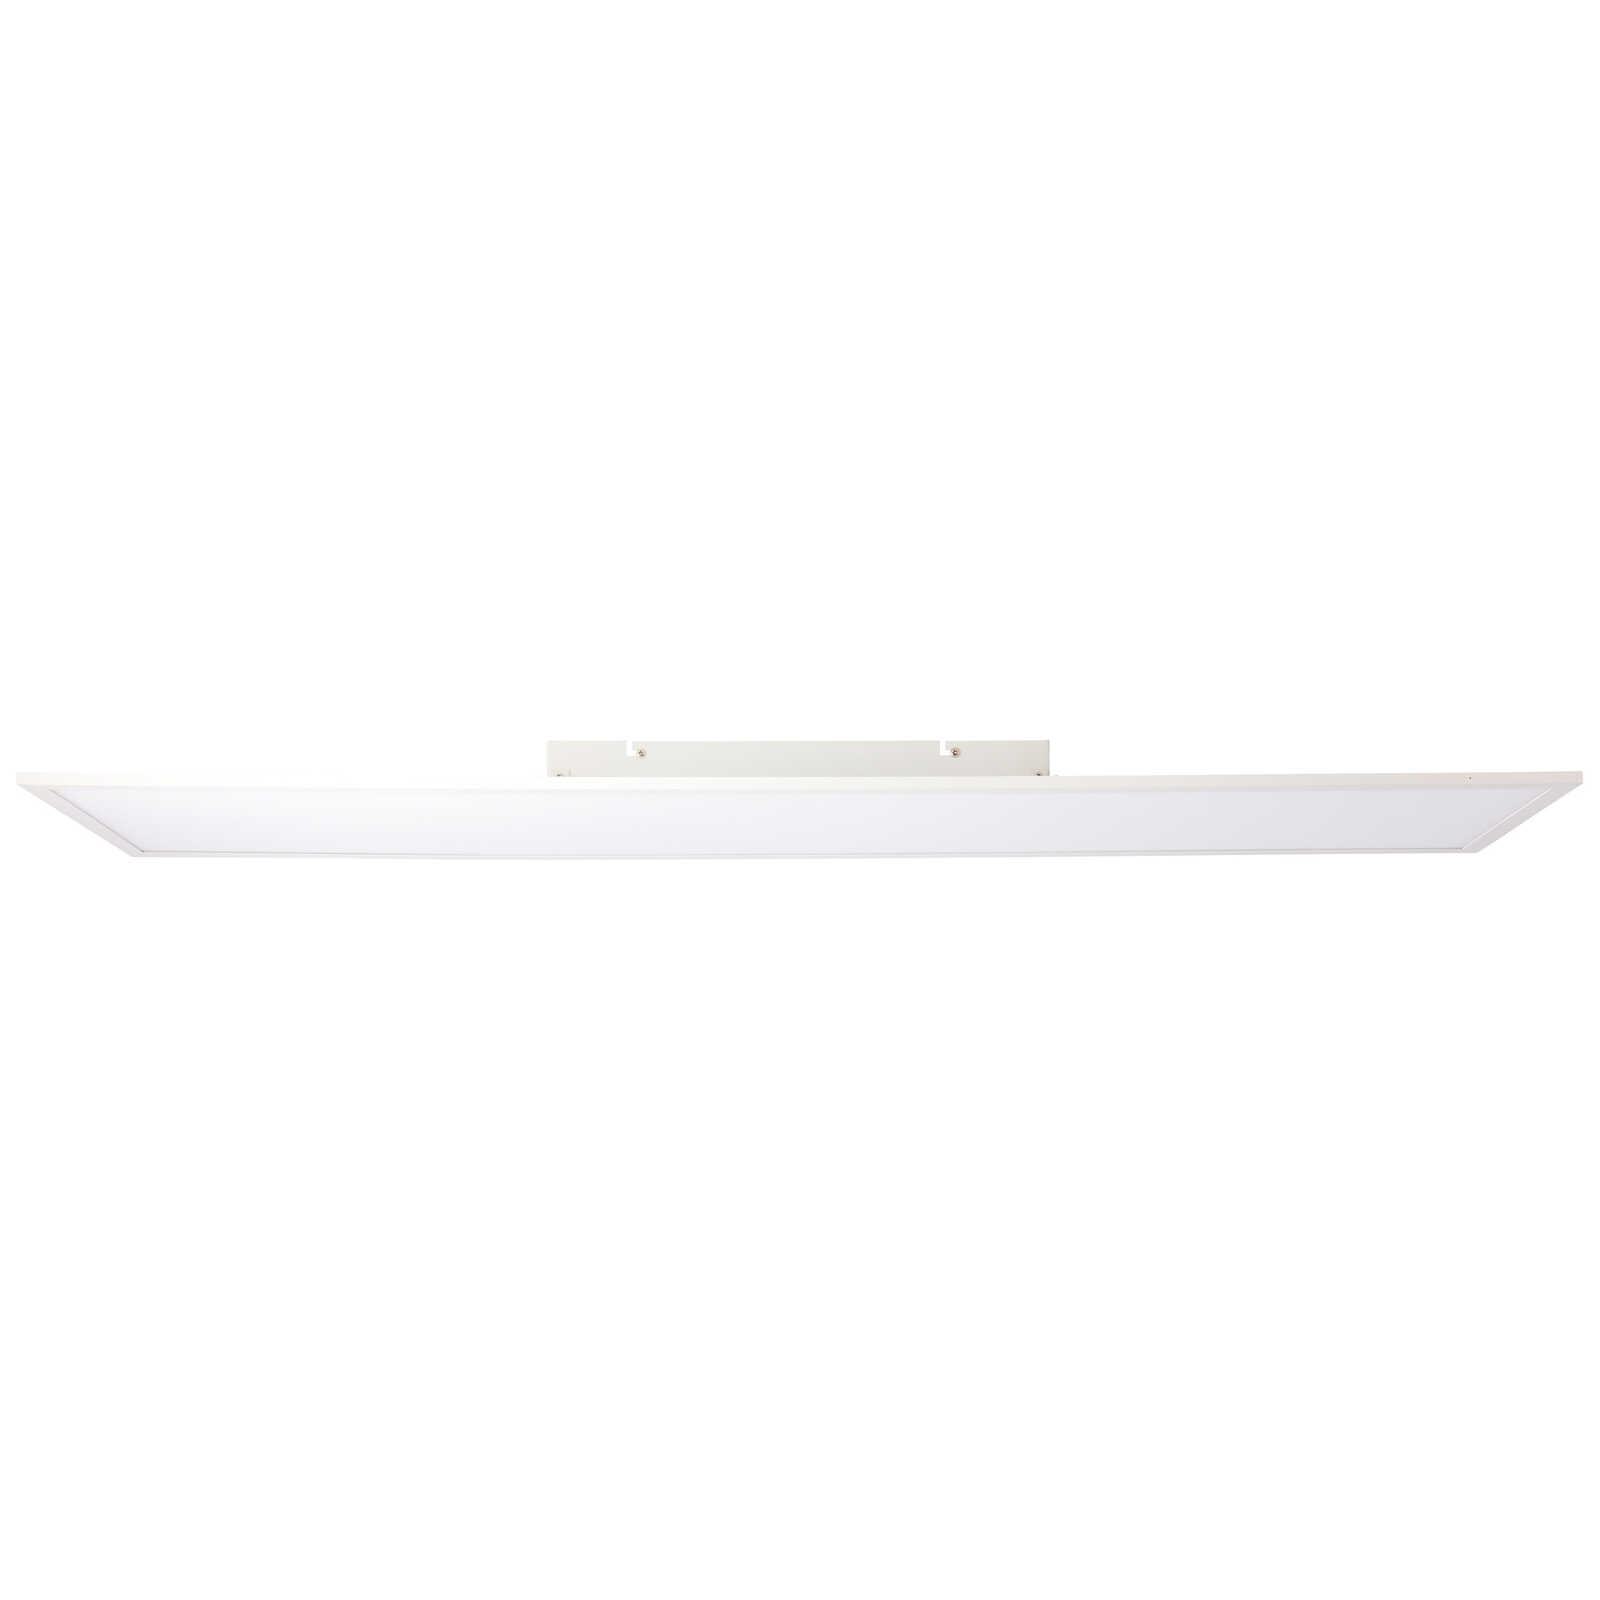             Plastic ceiling light - Constantin 11 - White
        